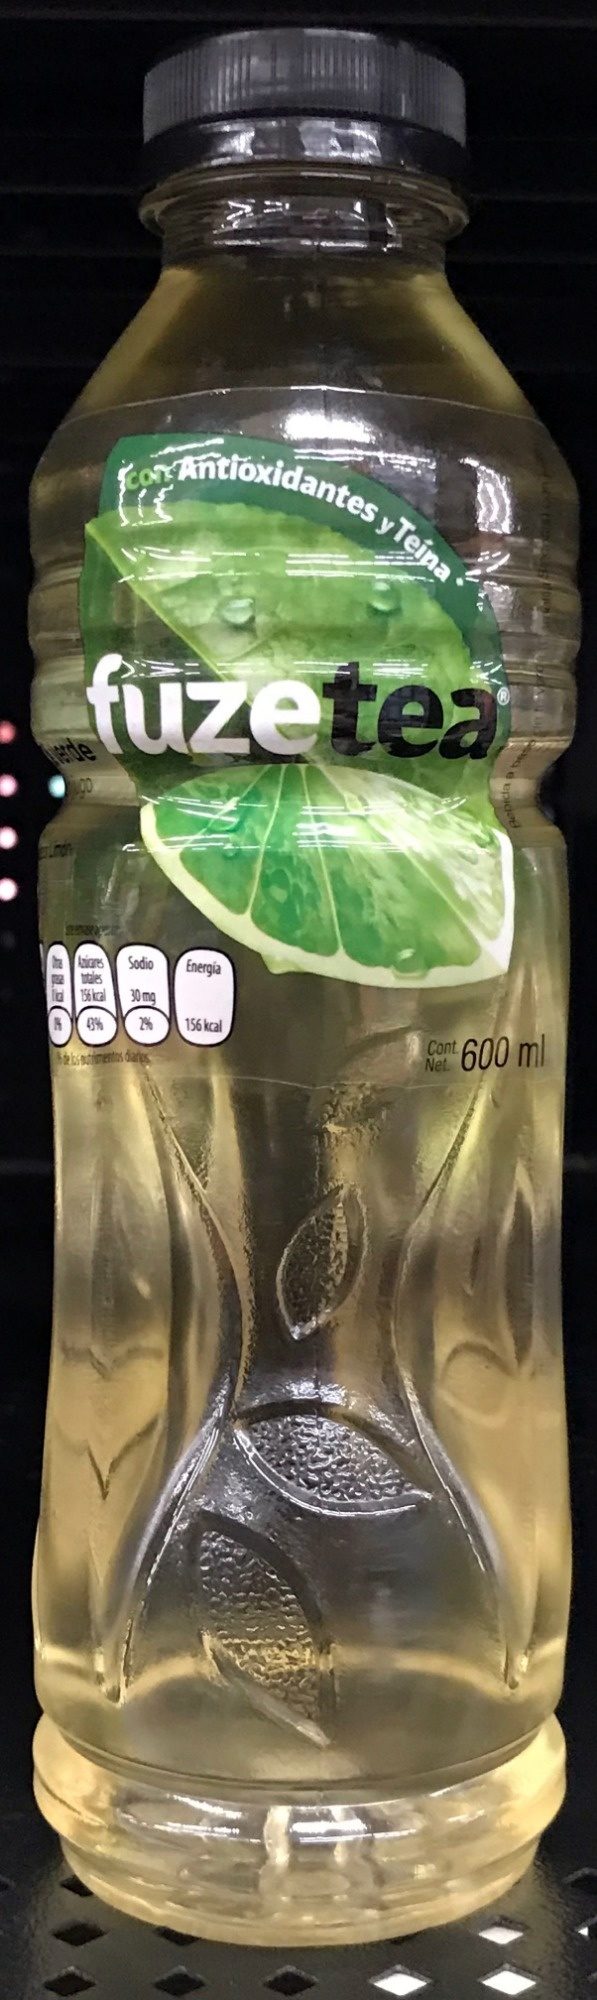 Fuze Tea Sabor Limón - Producto